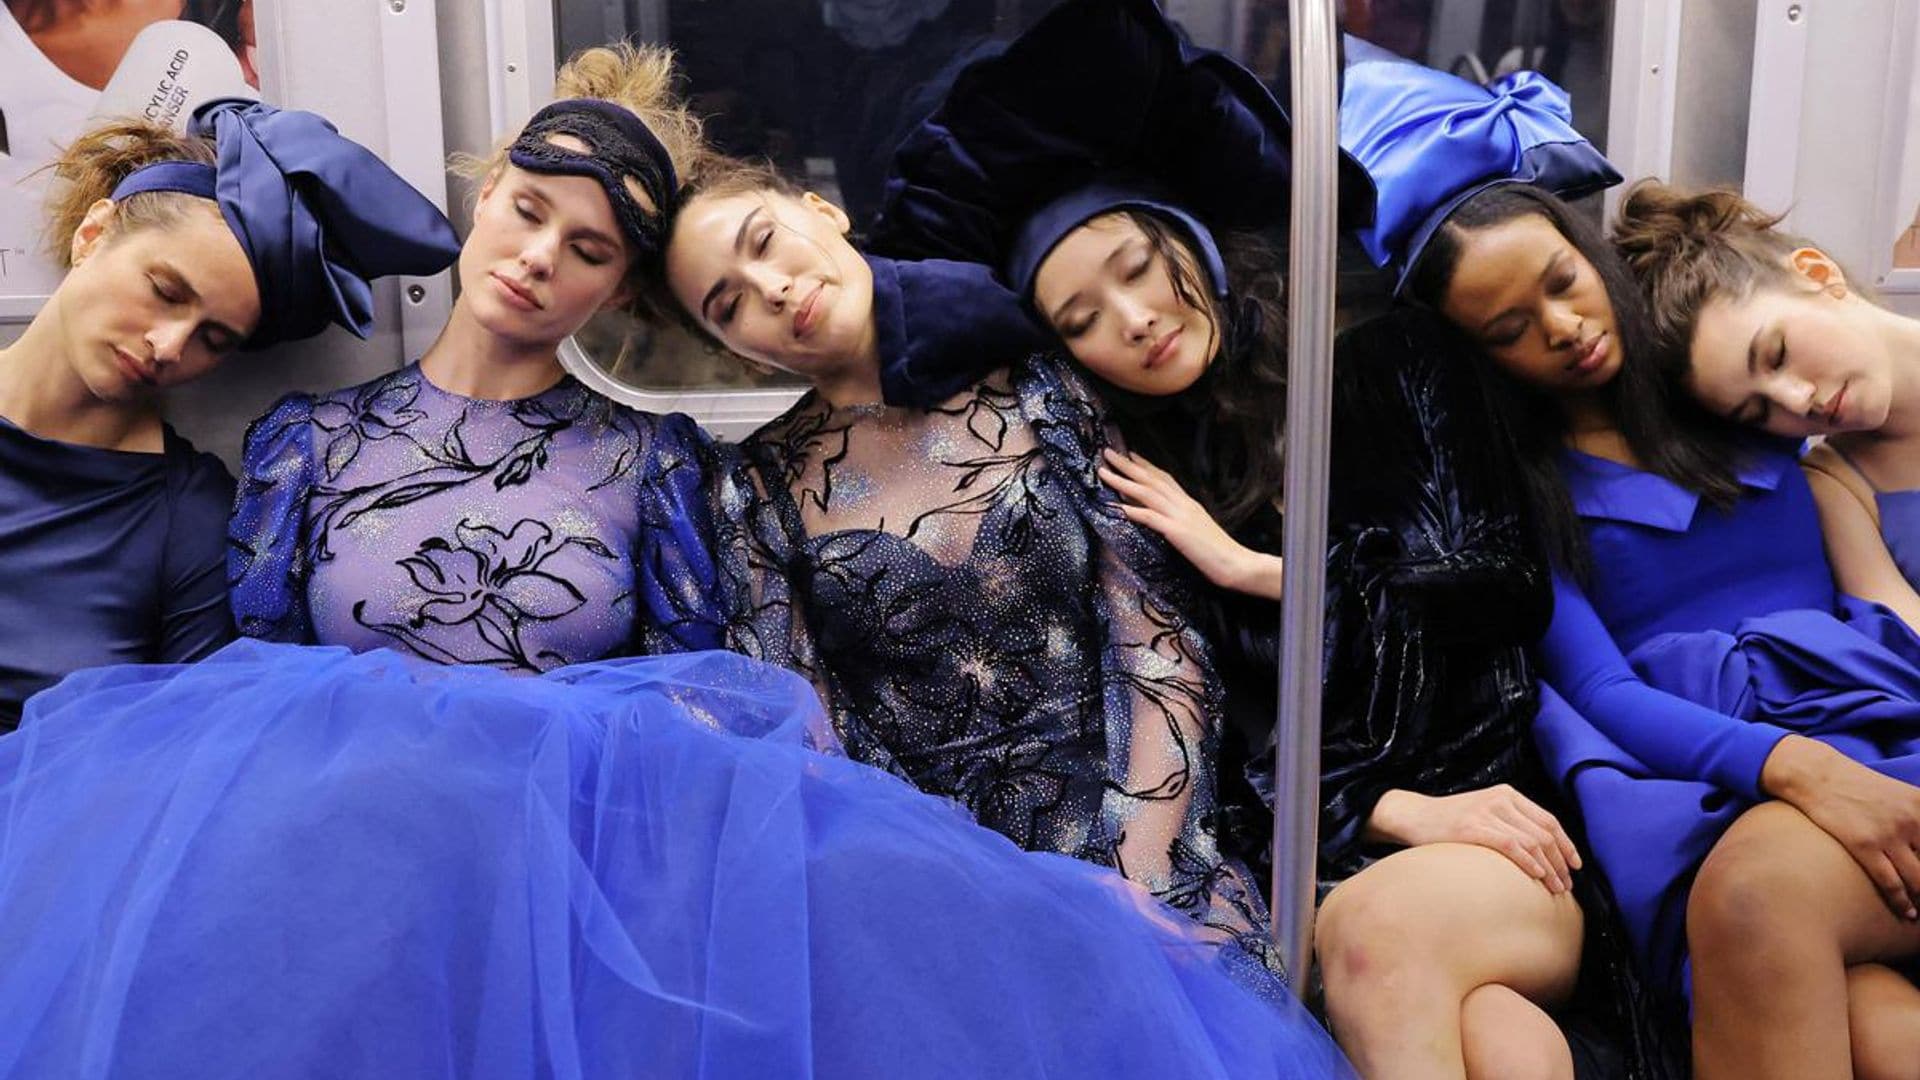 Unisom & Christian Siriano Highlight The Beauty Of Sleep On Fashion's Biggest Night